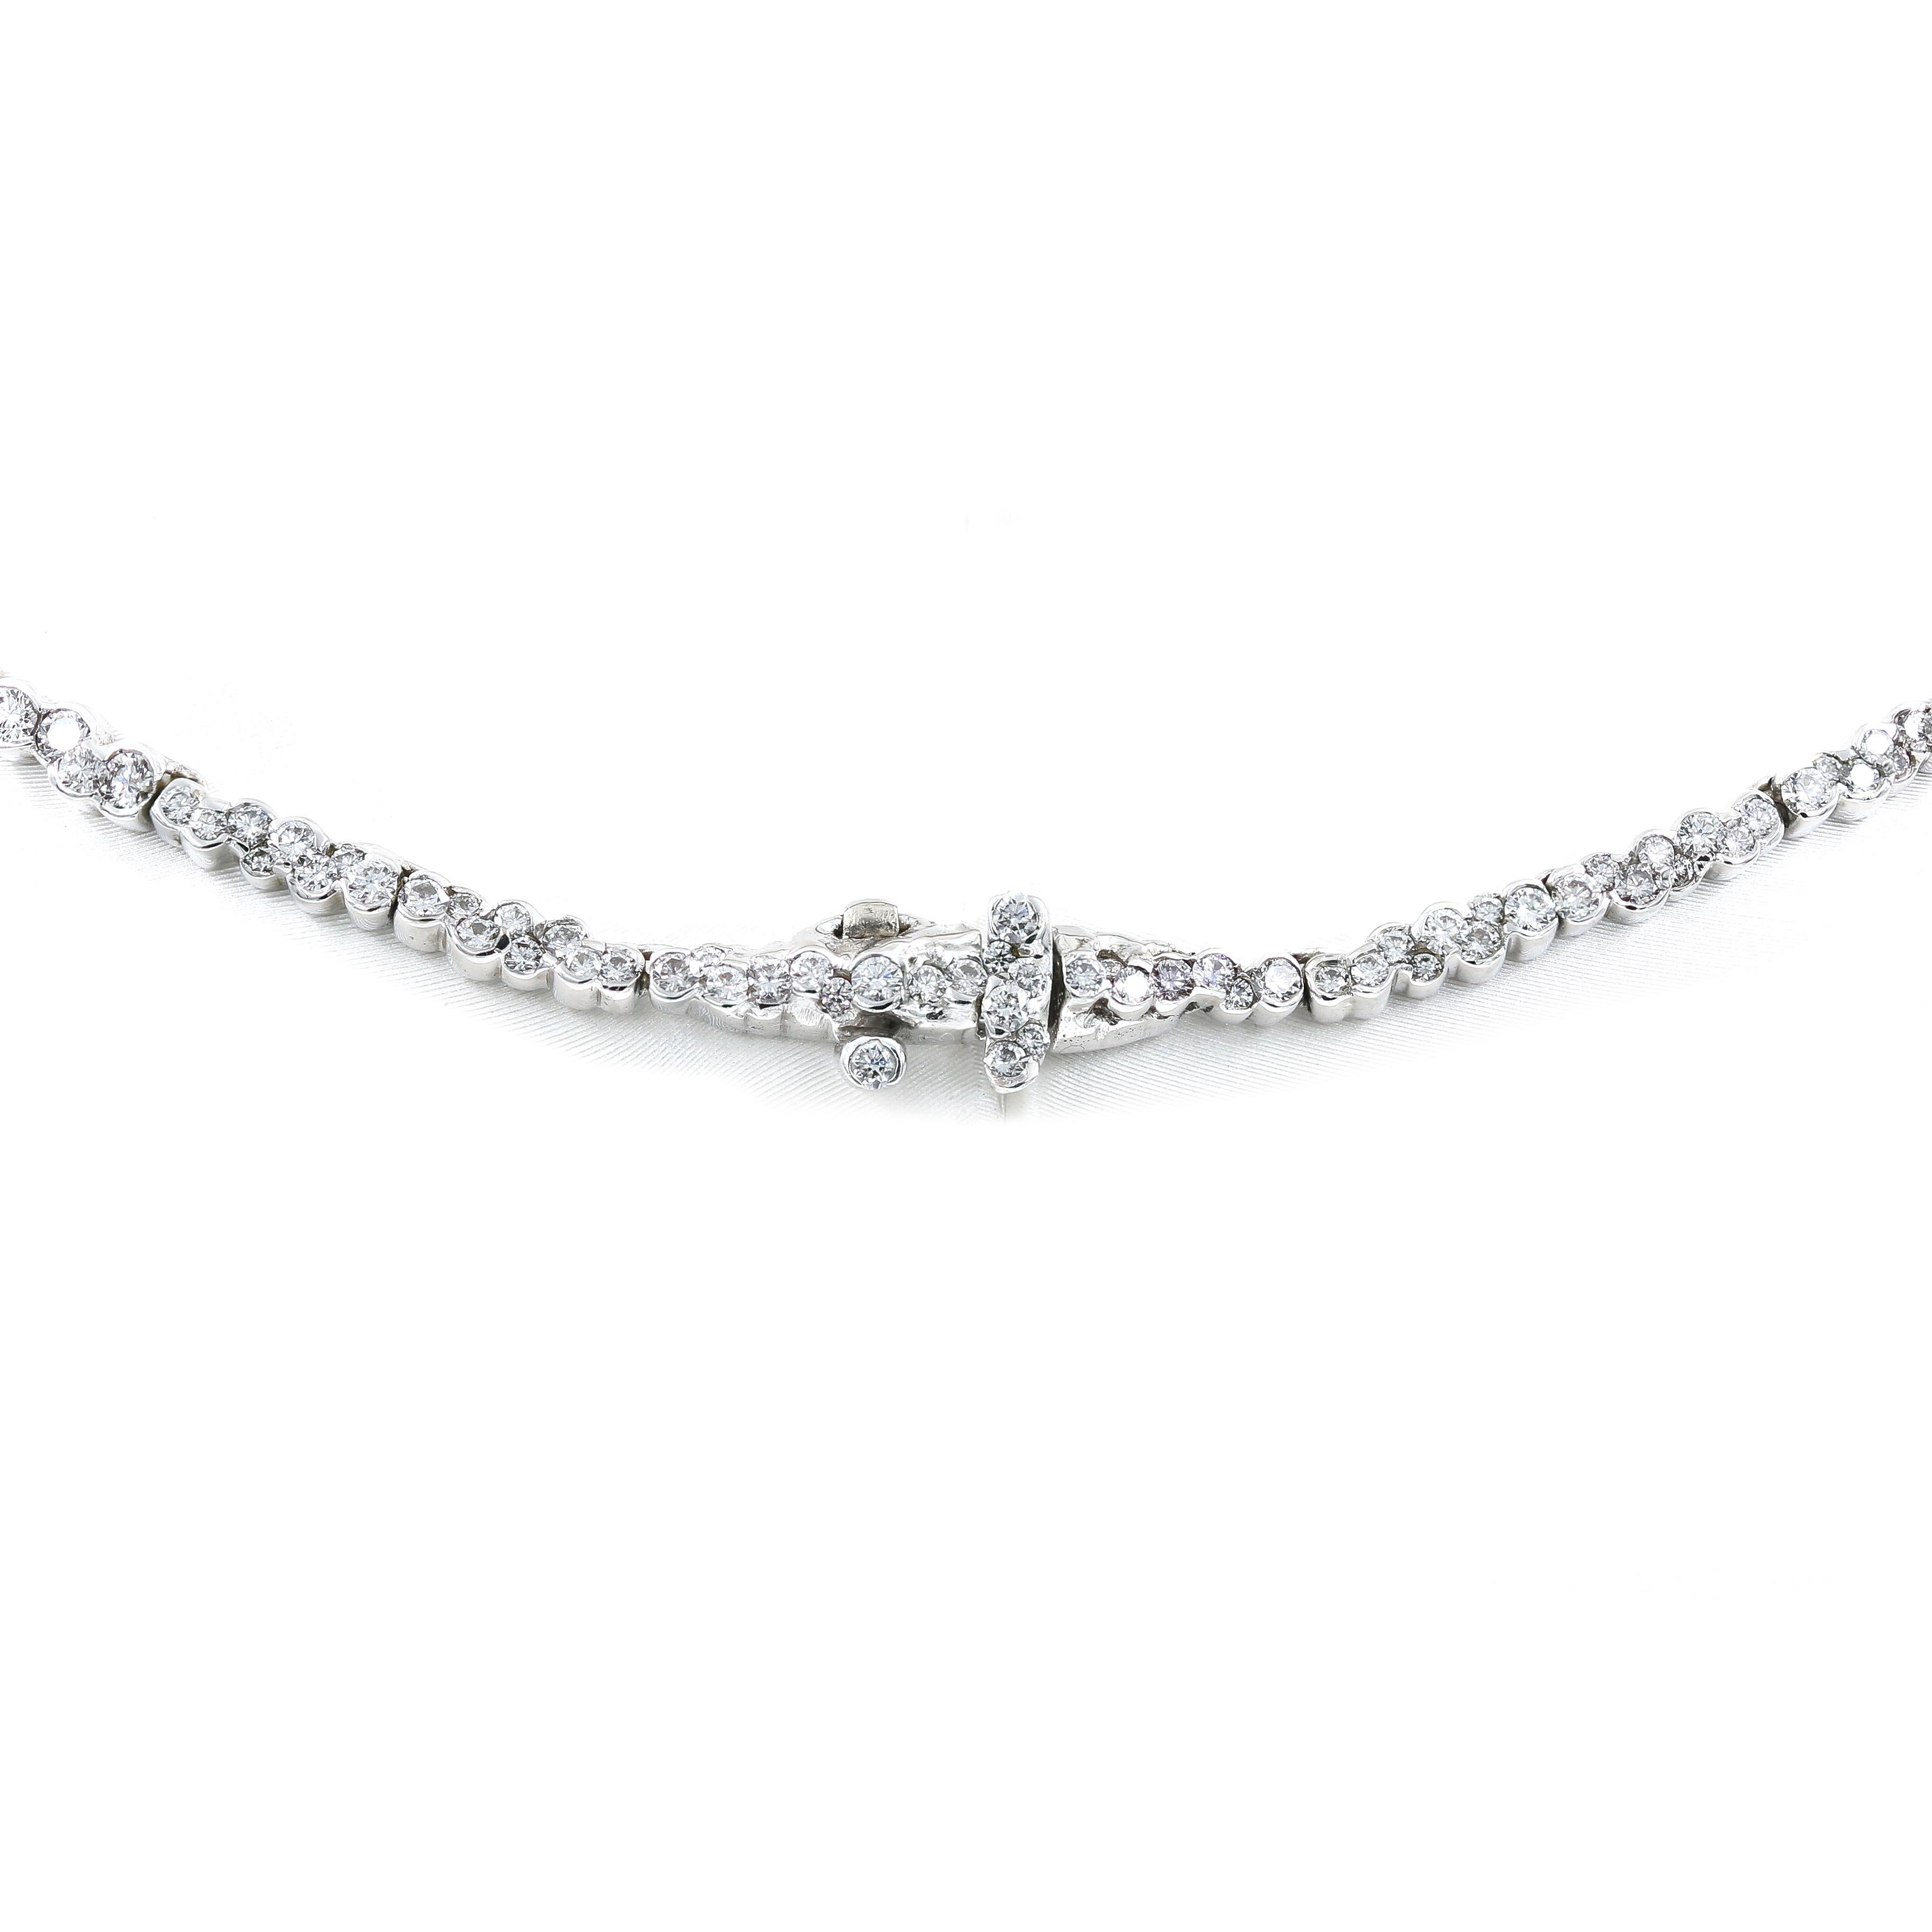 Contemporary Lester Lampert Original CumuLLus Cellebration Diamond Necklace in 18 Karat WG